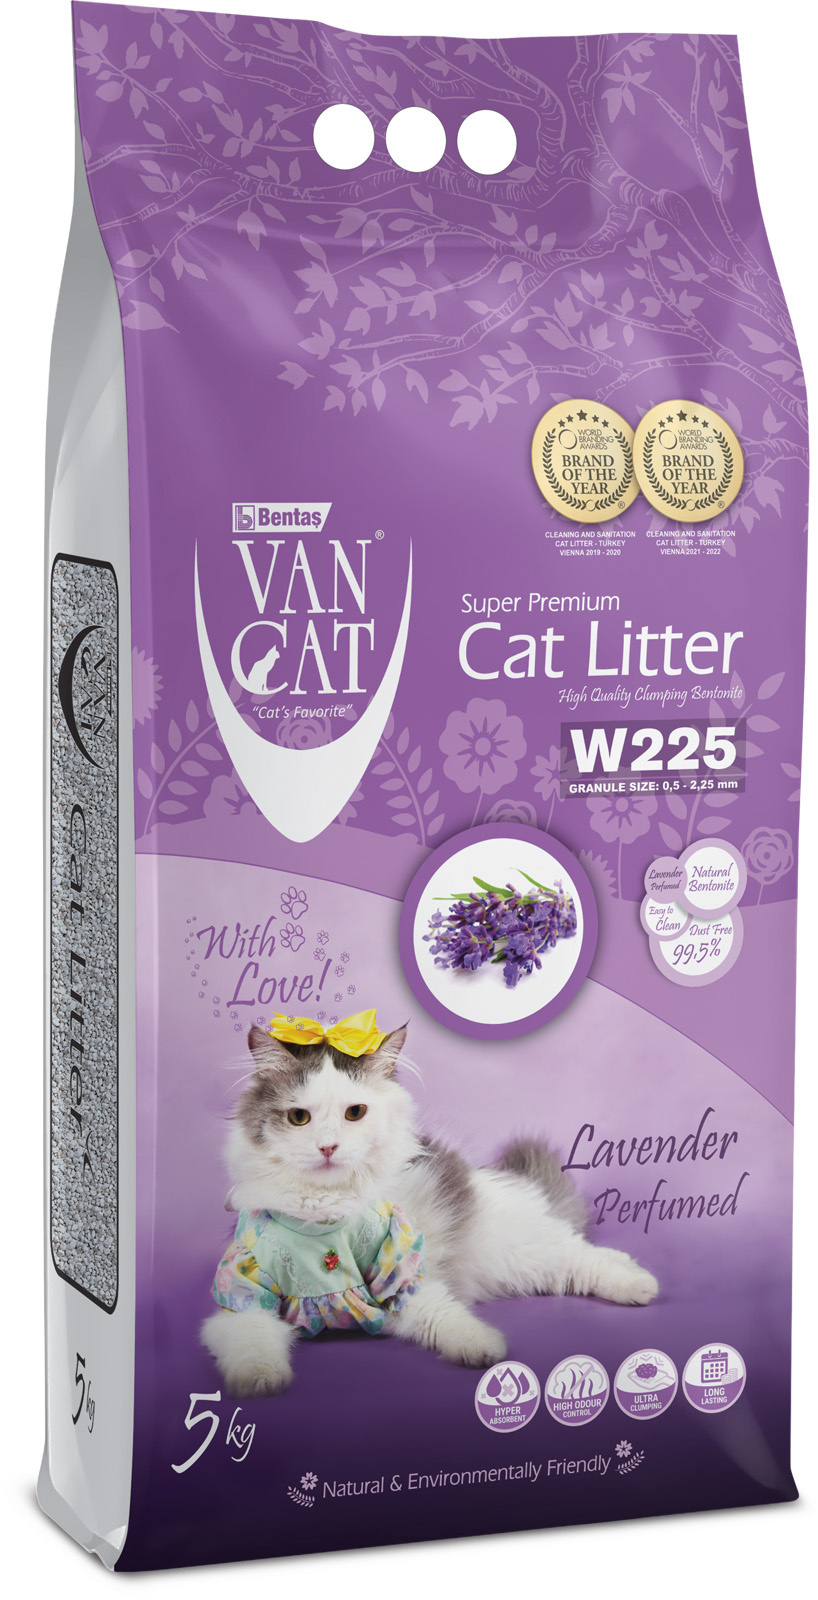 Van Cat Van Cat комкующийся наполнитель без пыли с ароматом лаванды, пакет (10 кг) van cat van cat комкующийся наполнитель без пыли с ароматом алое вера пакет 10 кг